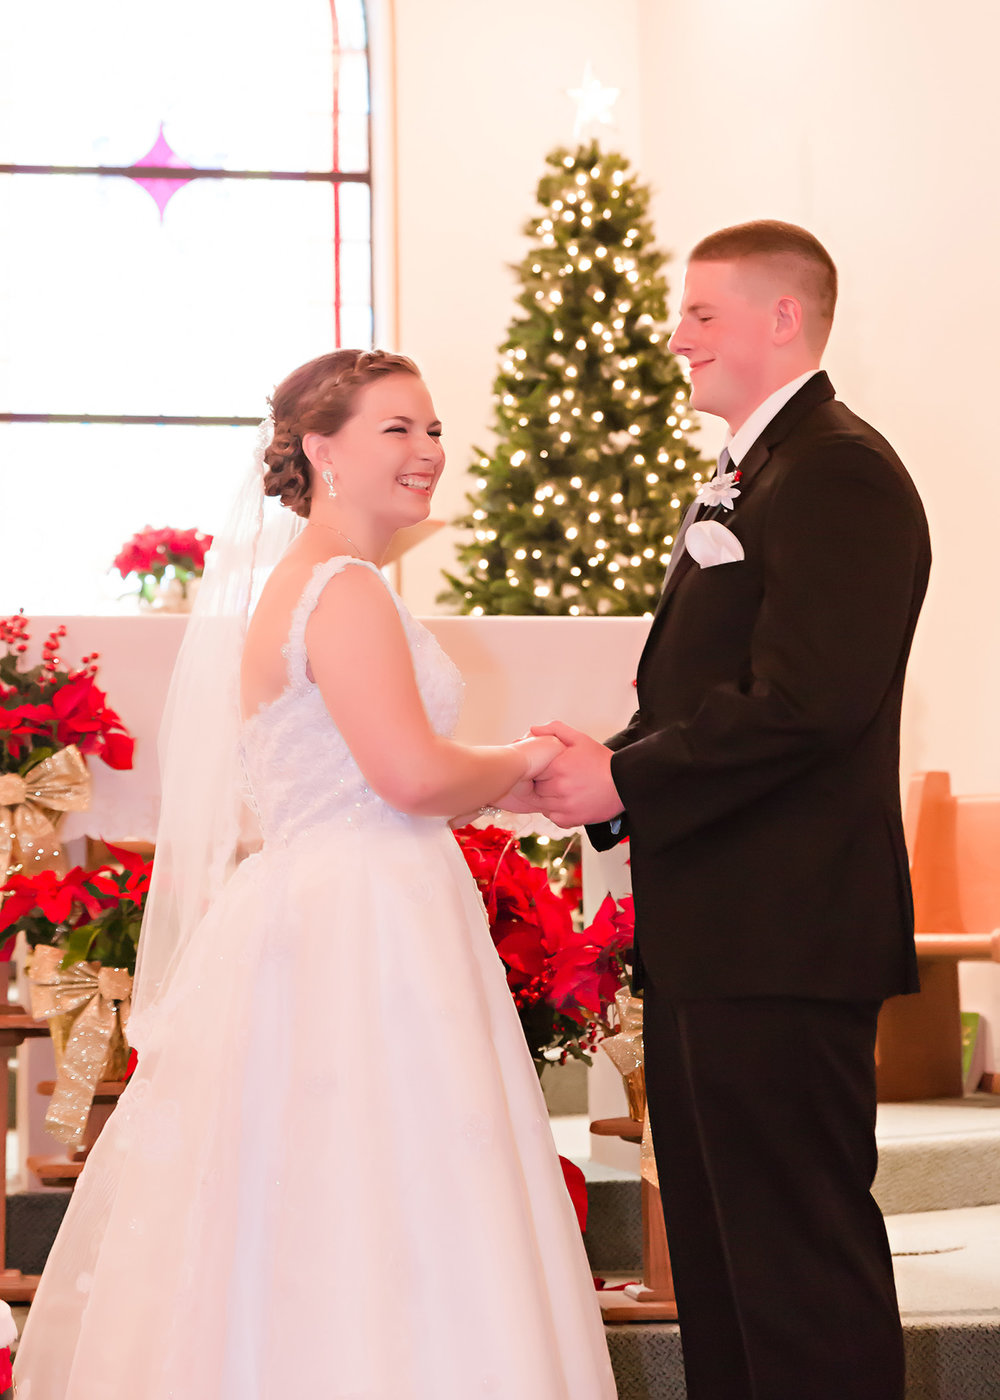 SSP Winter Wedding|ceremony|bride and groom| Christmas wedding